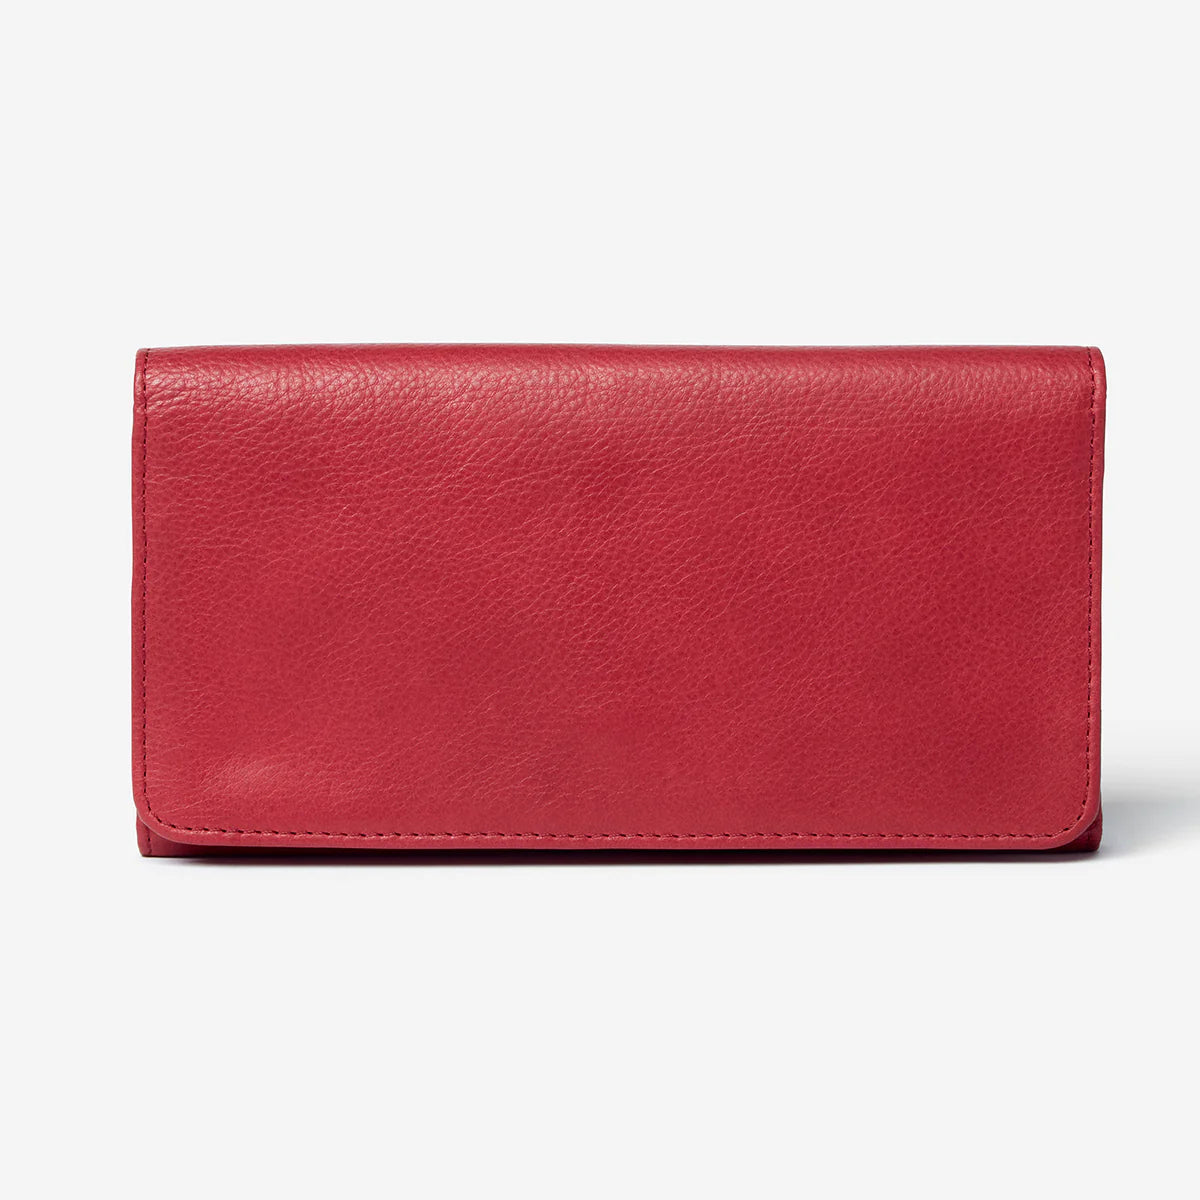 Osgoode Marley Leather RFID Checkbook Wallet